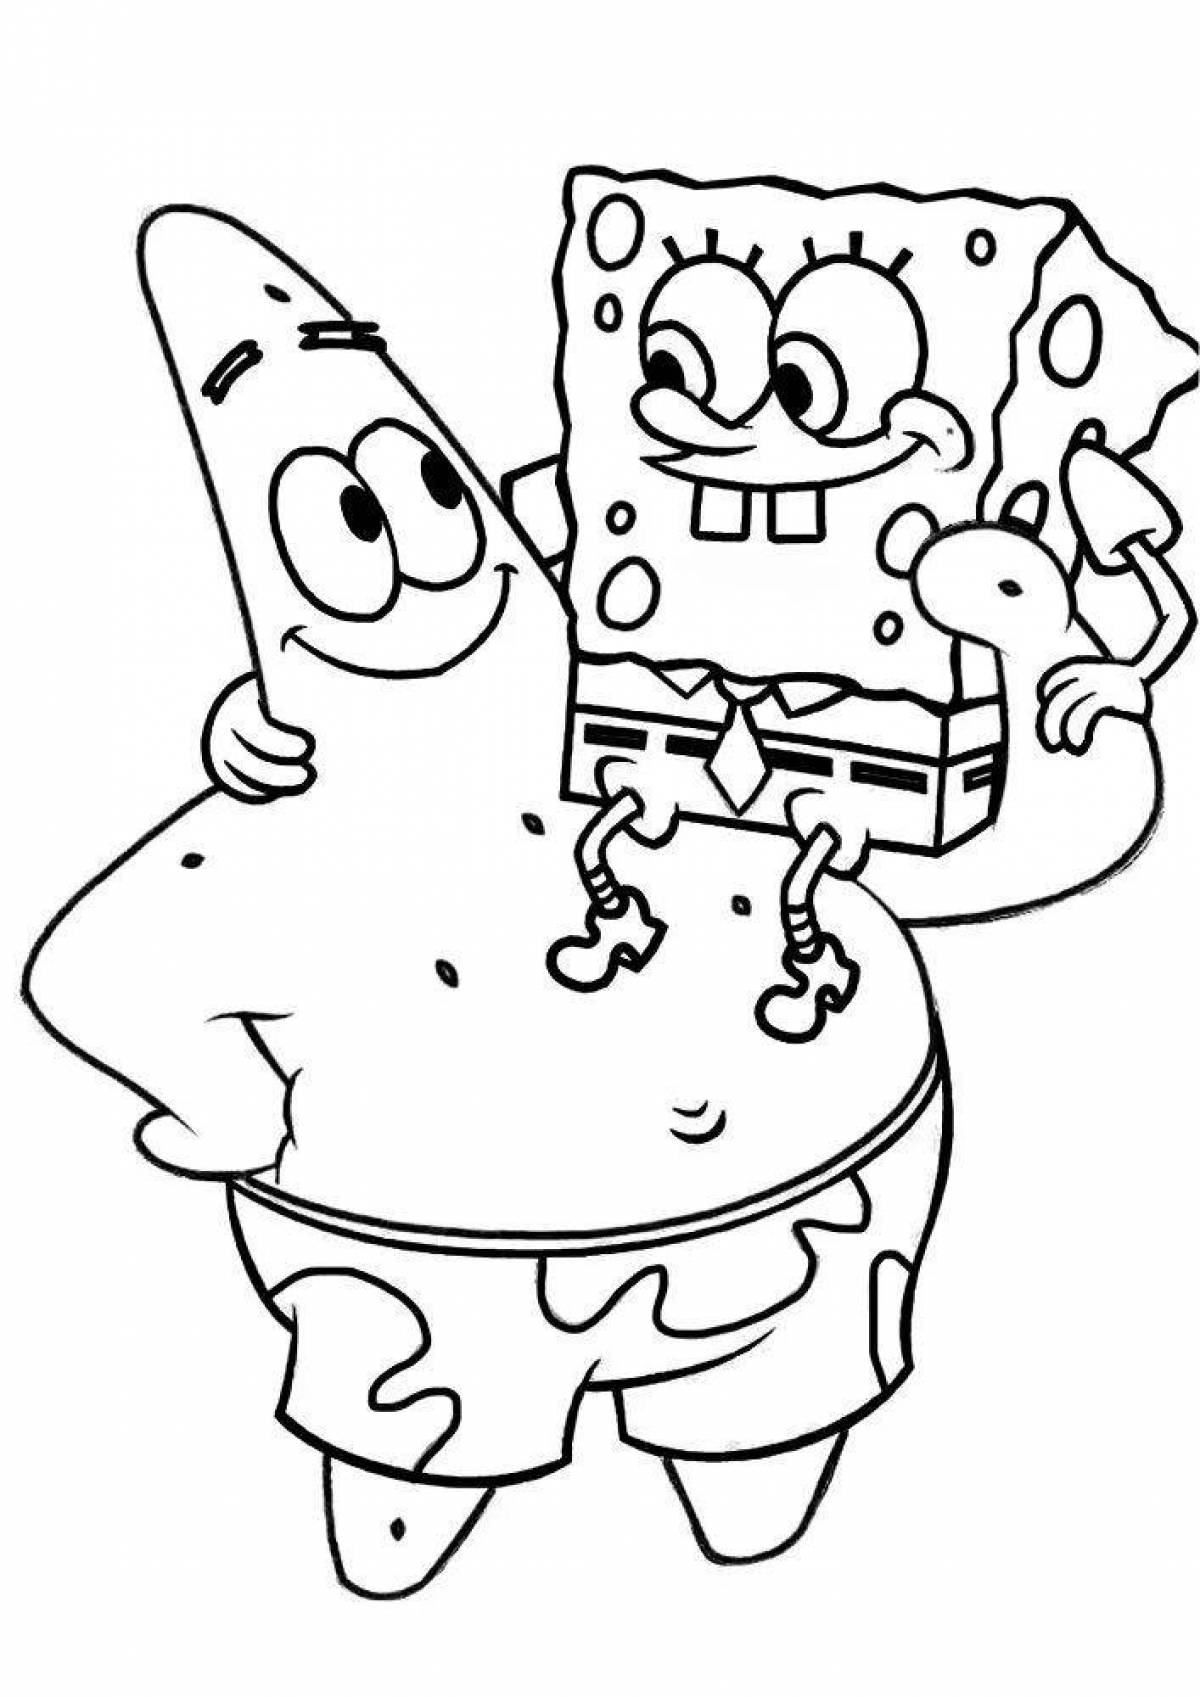 Spongebob and friends #6